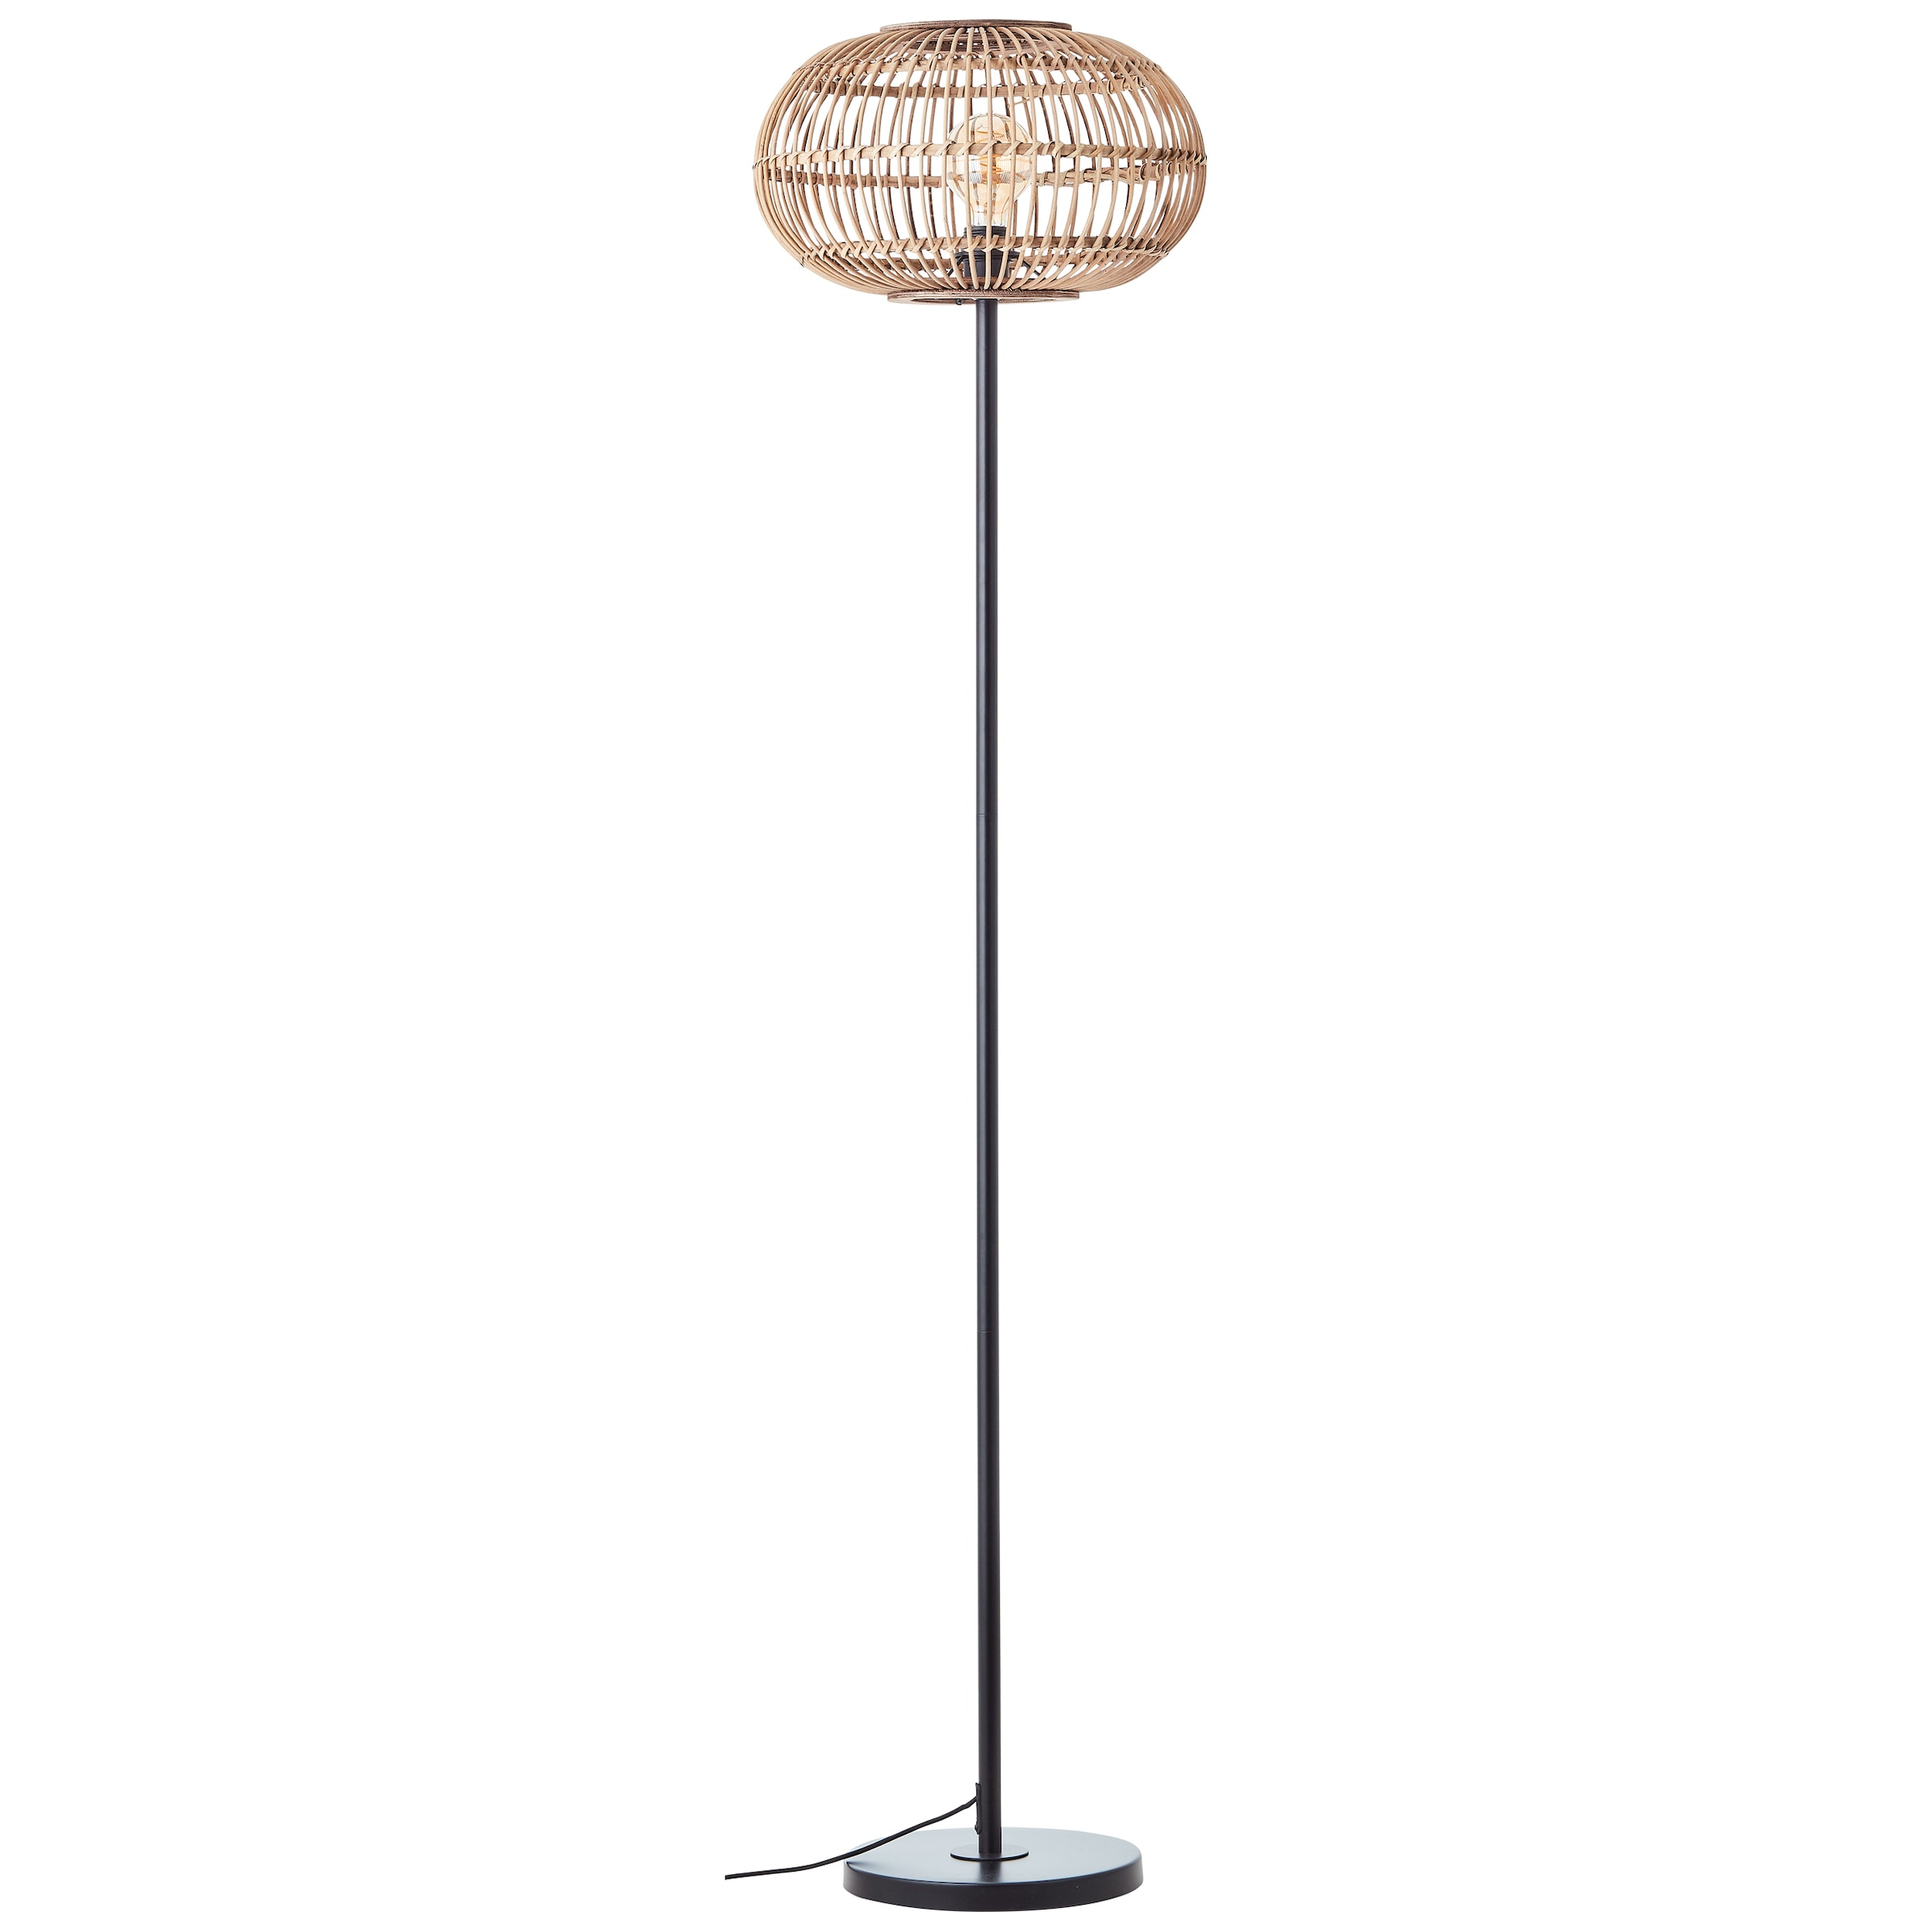 Brilliant Stehlampe »Woodball«, 1 flammig-flammig, mit Bambus Schirm, 153 x 38 cm, E27, matt schwarz/natur